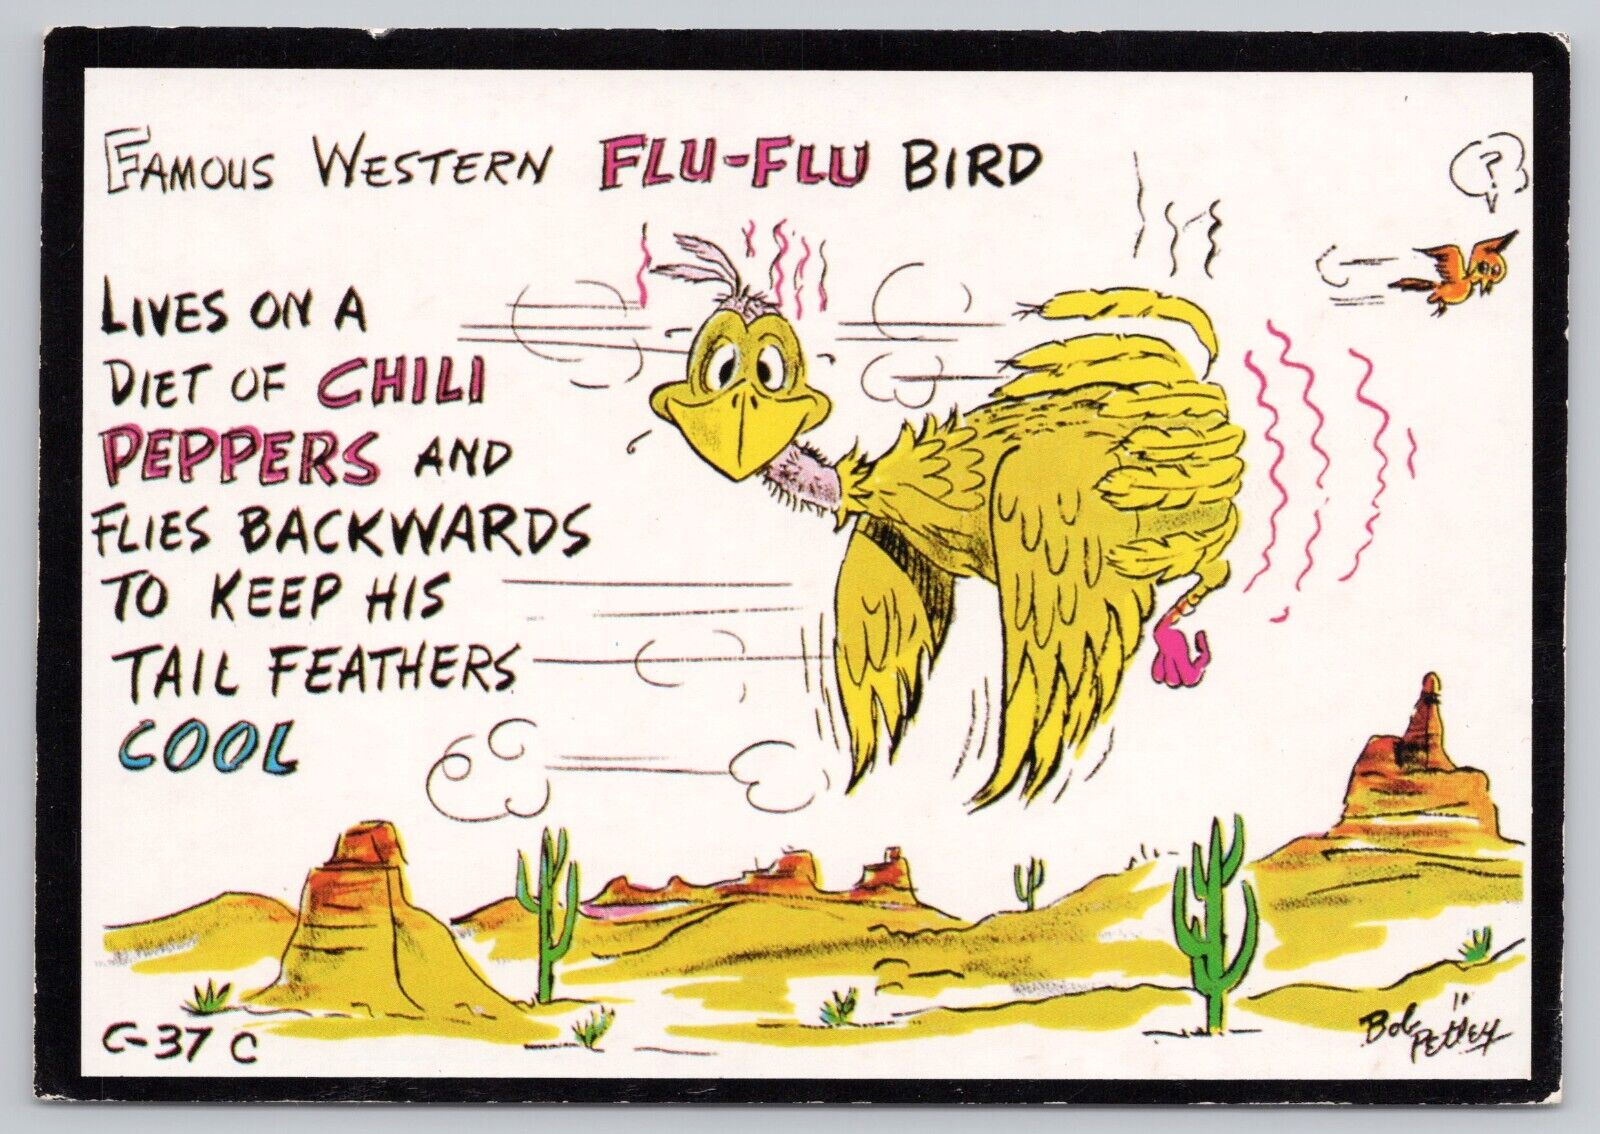 Desert Flu-flu Bird Eats Chili Peppers Flies Backwards Comic Humor, VTG Postcard